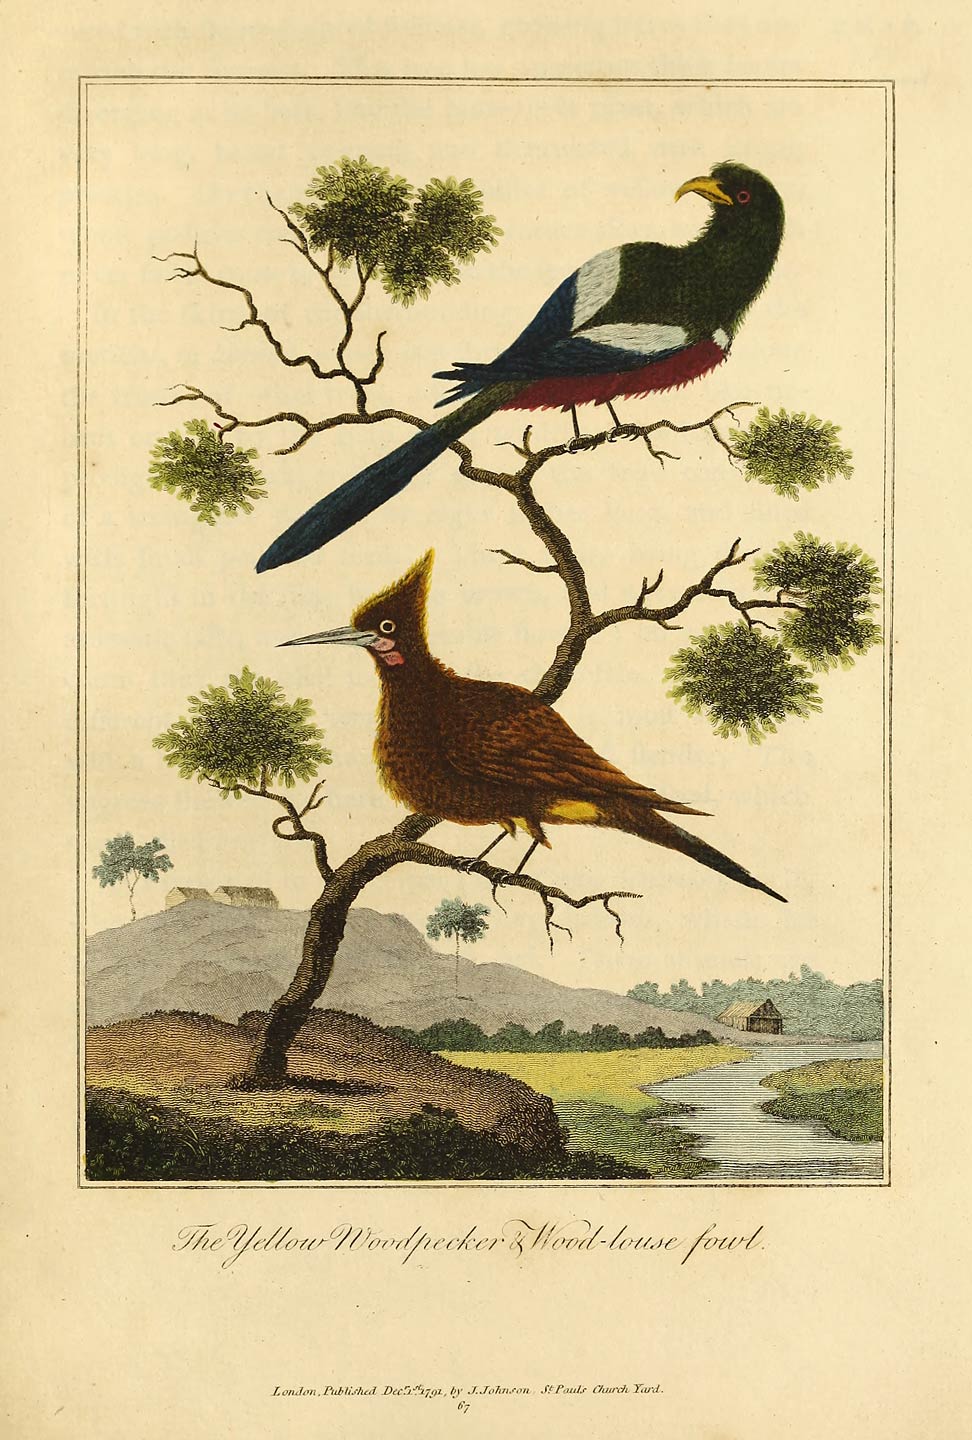 The Yellow Woodpecker & Wood-louse fowl.